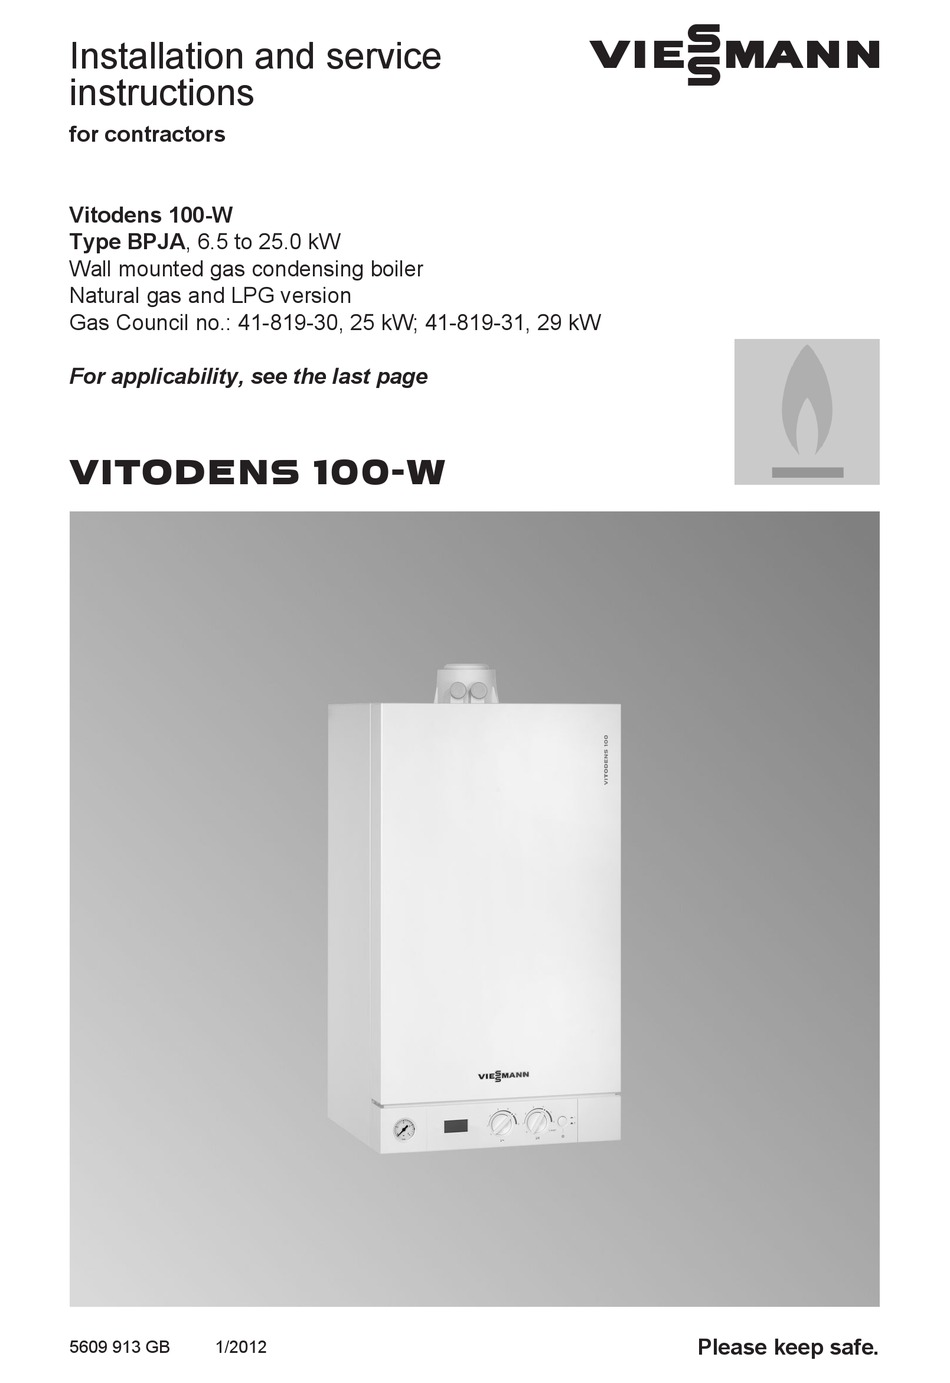 Viessmann Vitodens 100 W Boiler